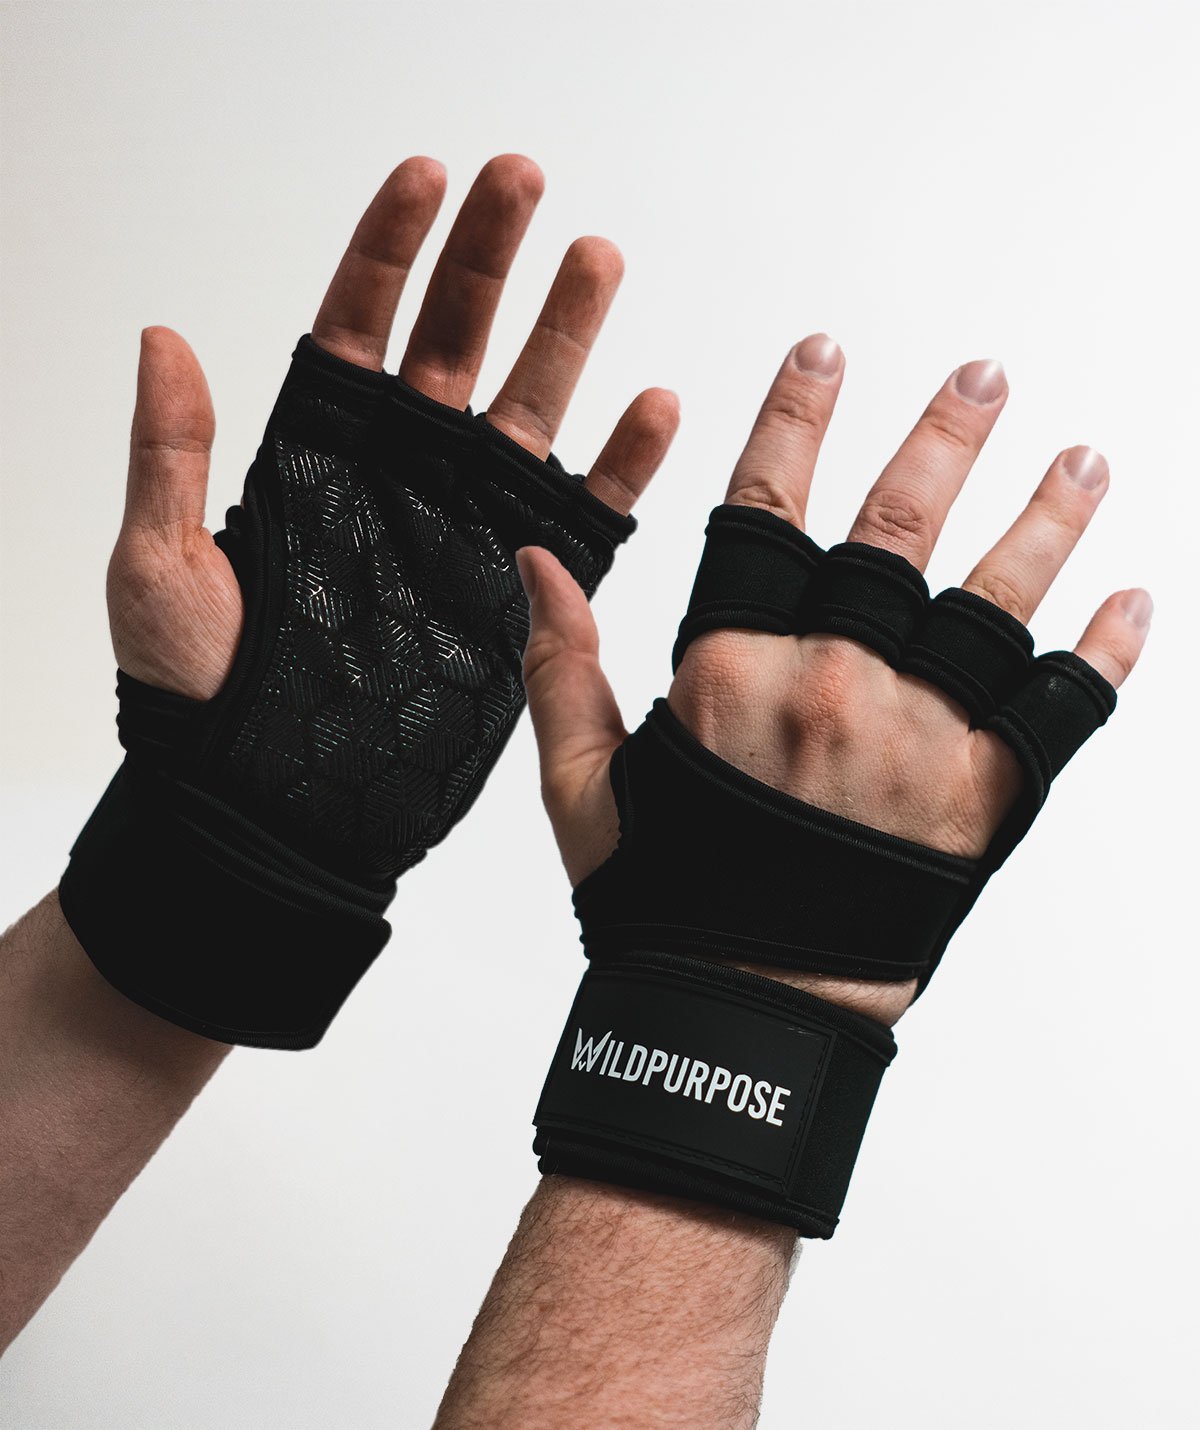 Purpose Gloves